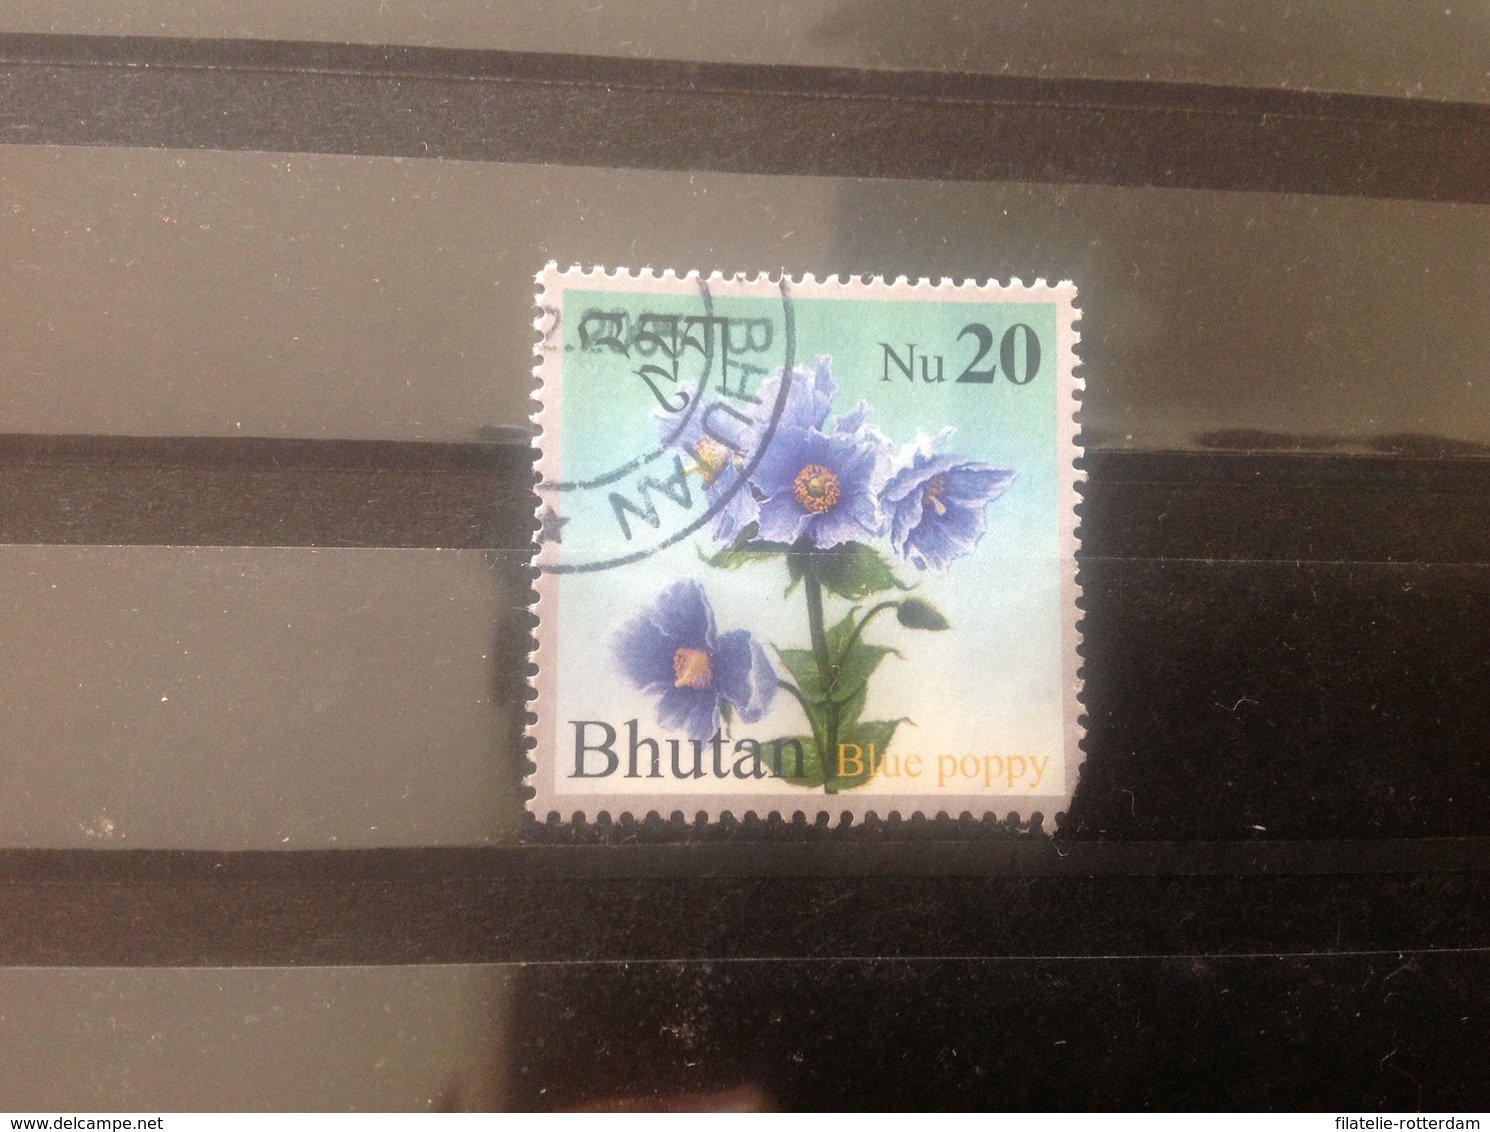 Bhutan - Nationale Symbolen (20) 2005 - Bhutan